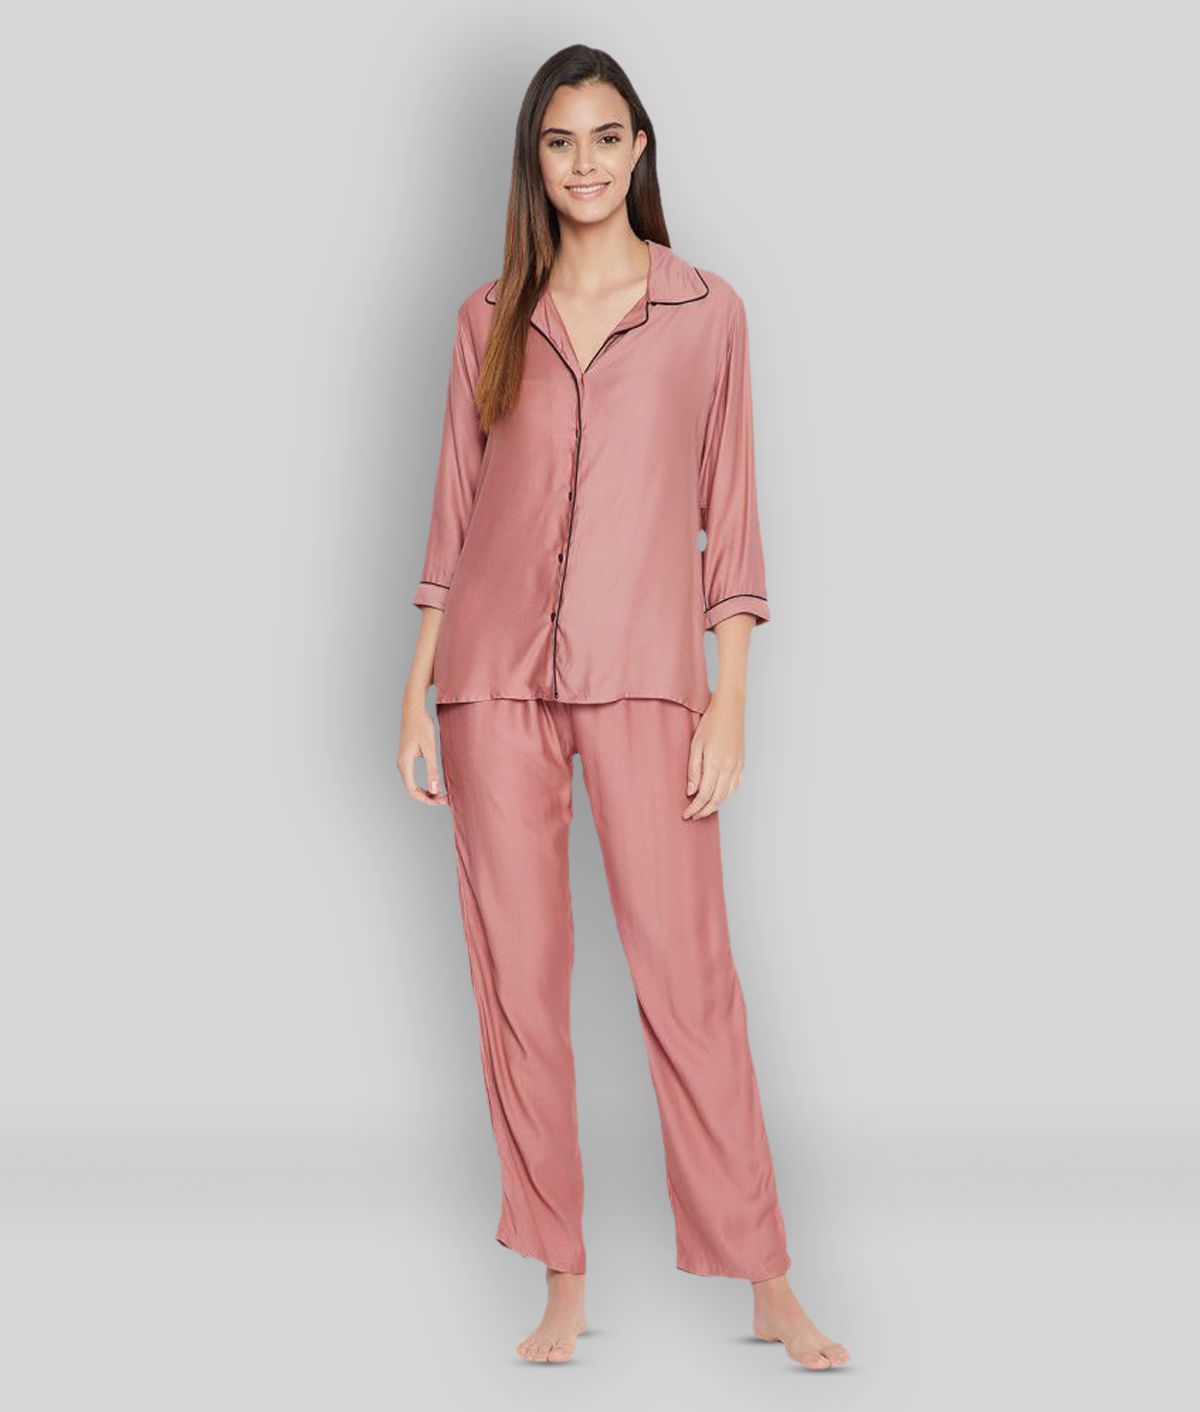     			Clovia - Peach Satin Women's Nightwear Nightsuit Sets